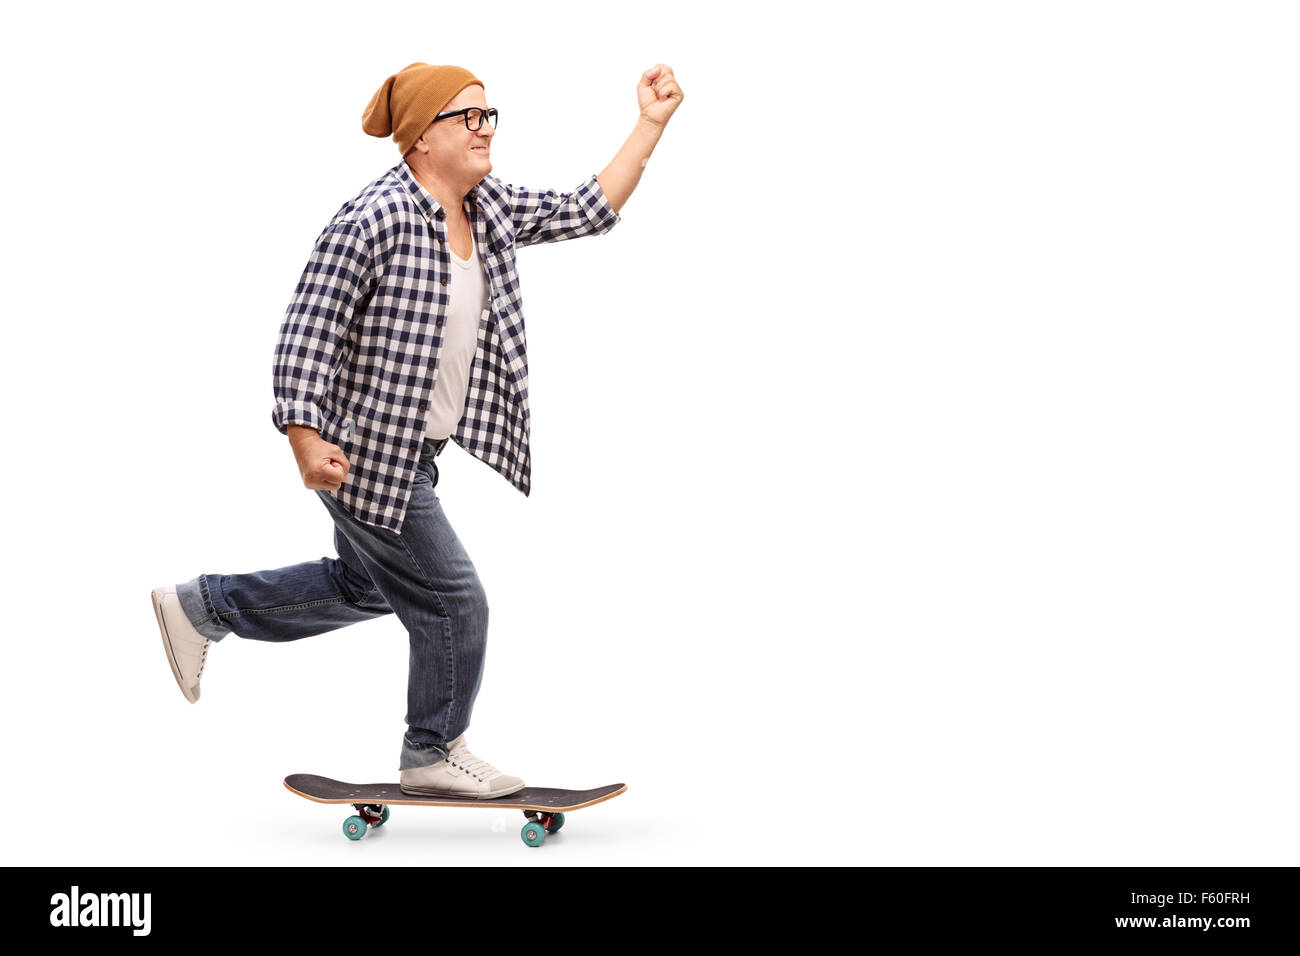 Profile shot of a joyful senior skater riding a skateboard isolated on white background Stock Photo